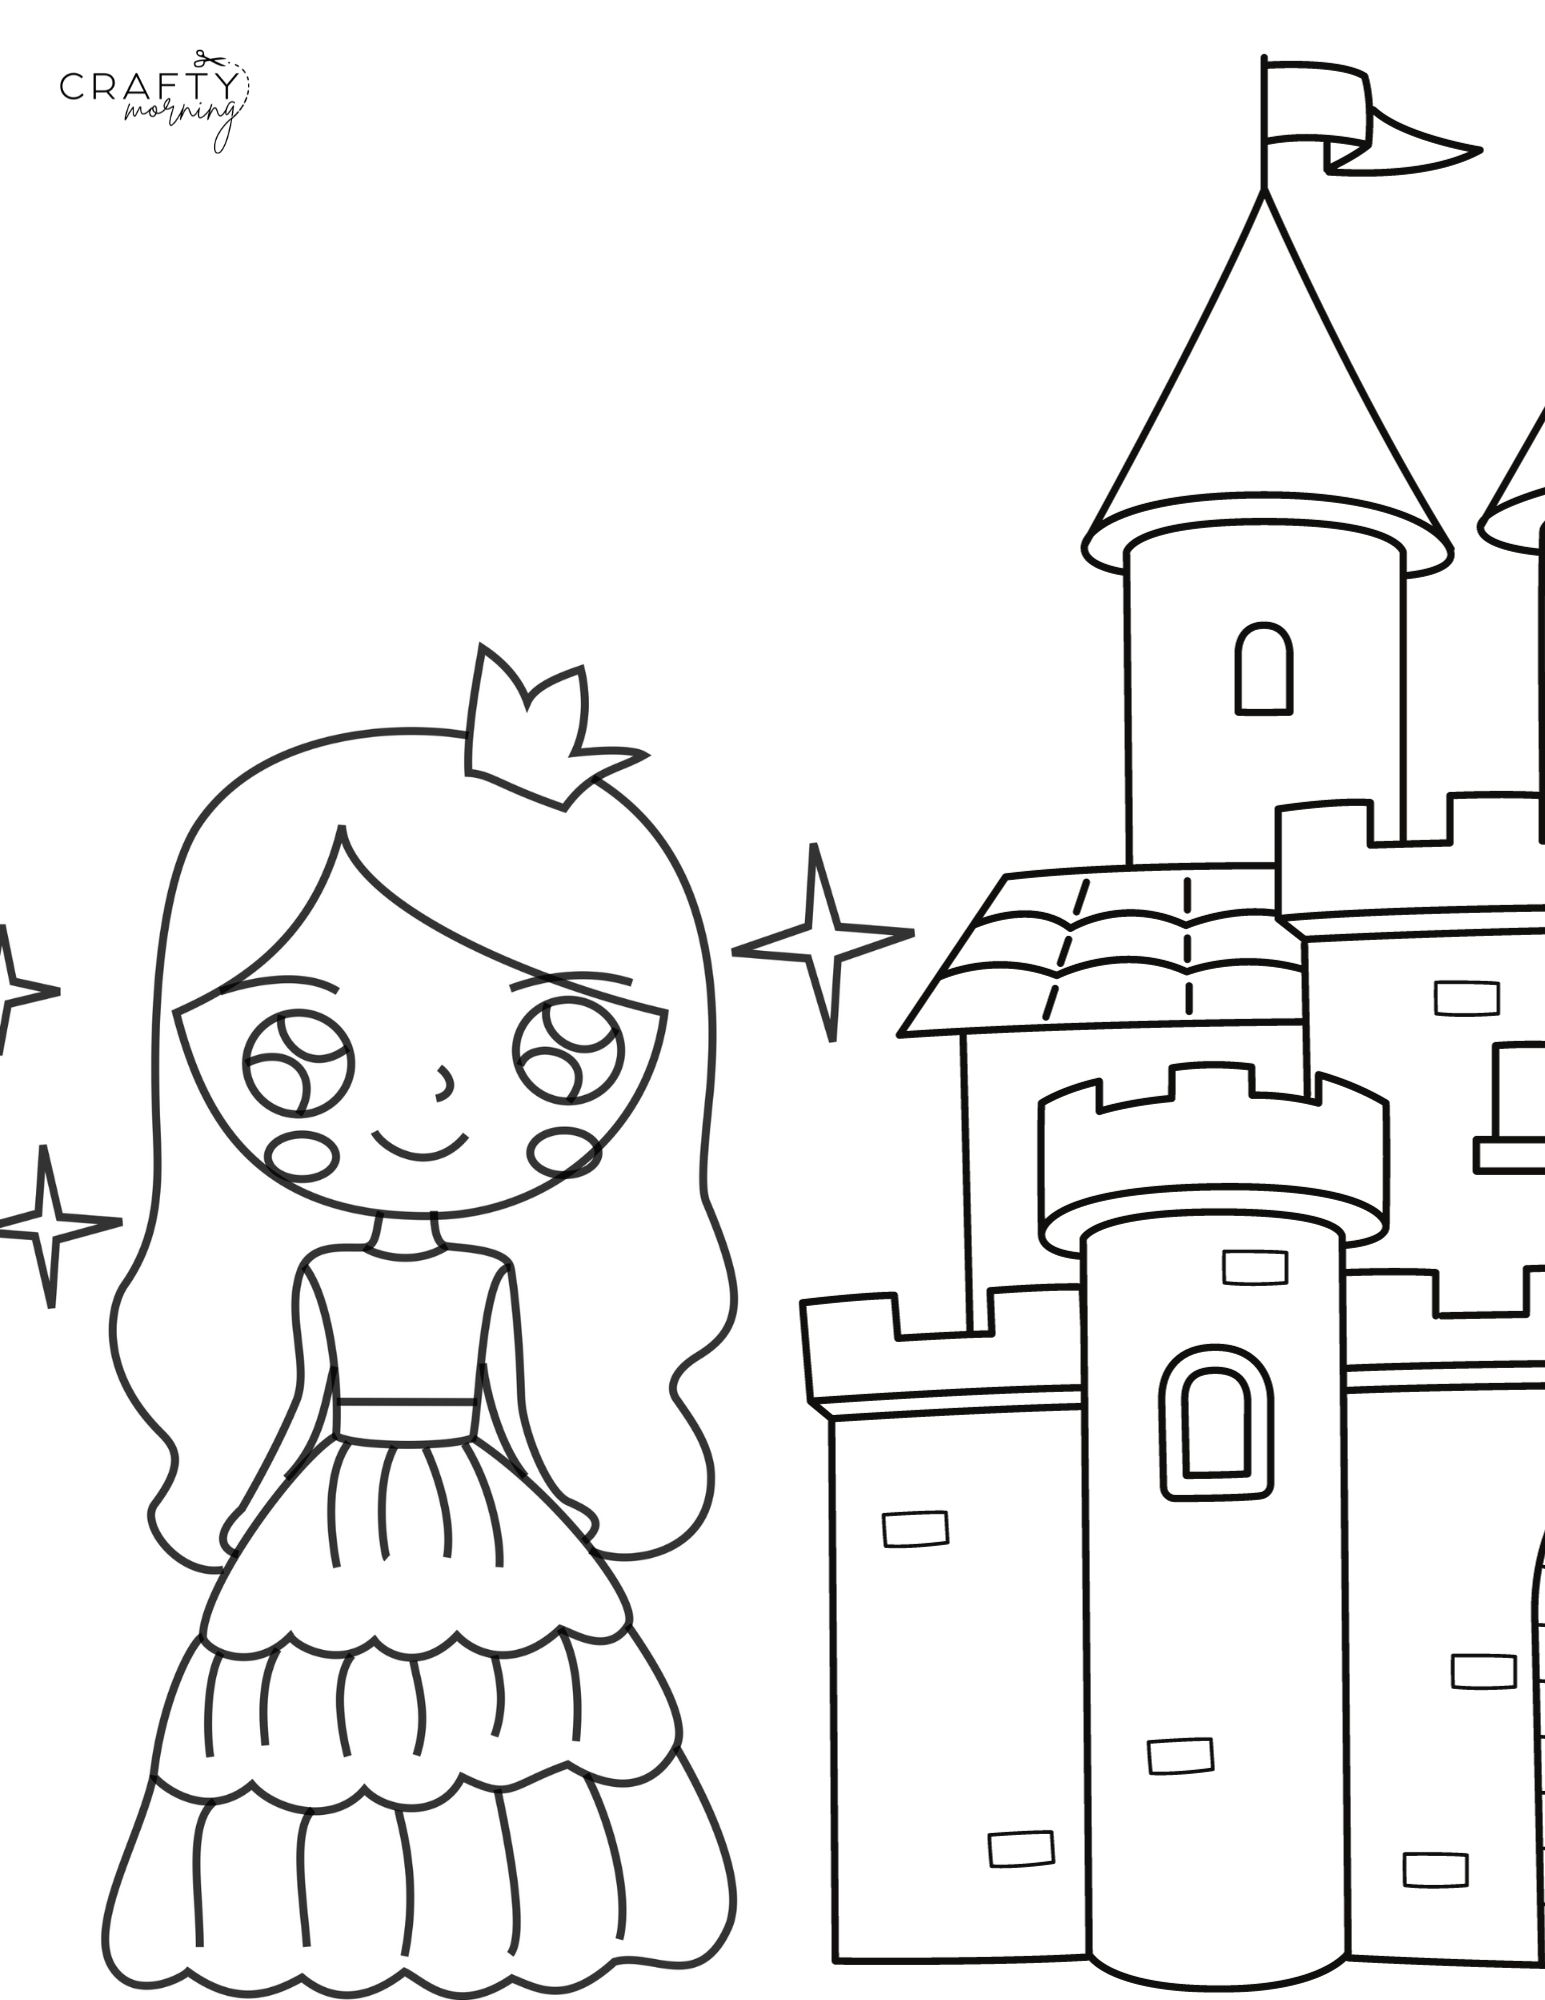 How to Draw Disney Princess | For Kids | Easy Drawing | Disney princess  drawings, Business for kids, Easy kids